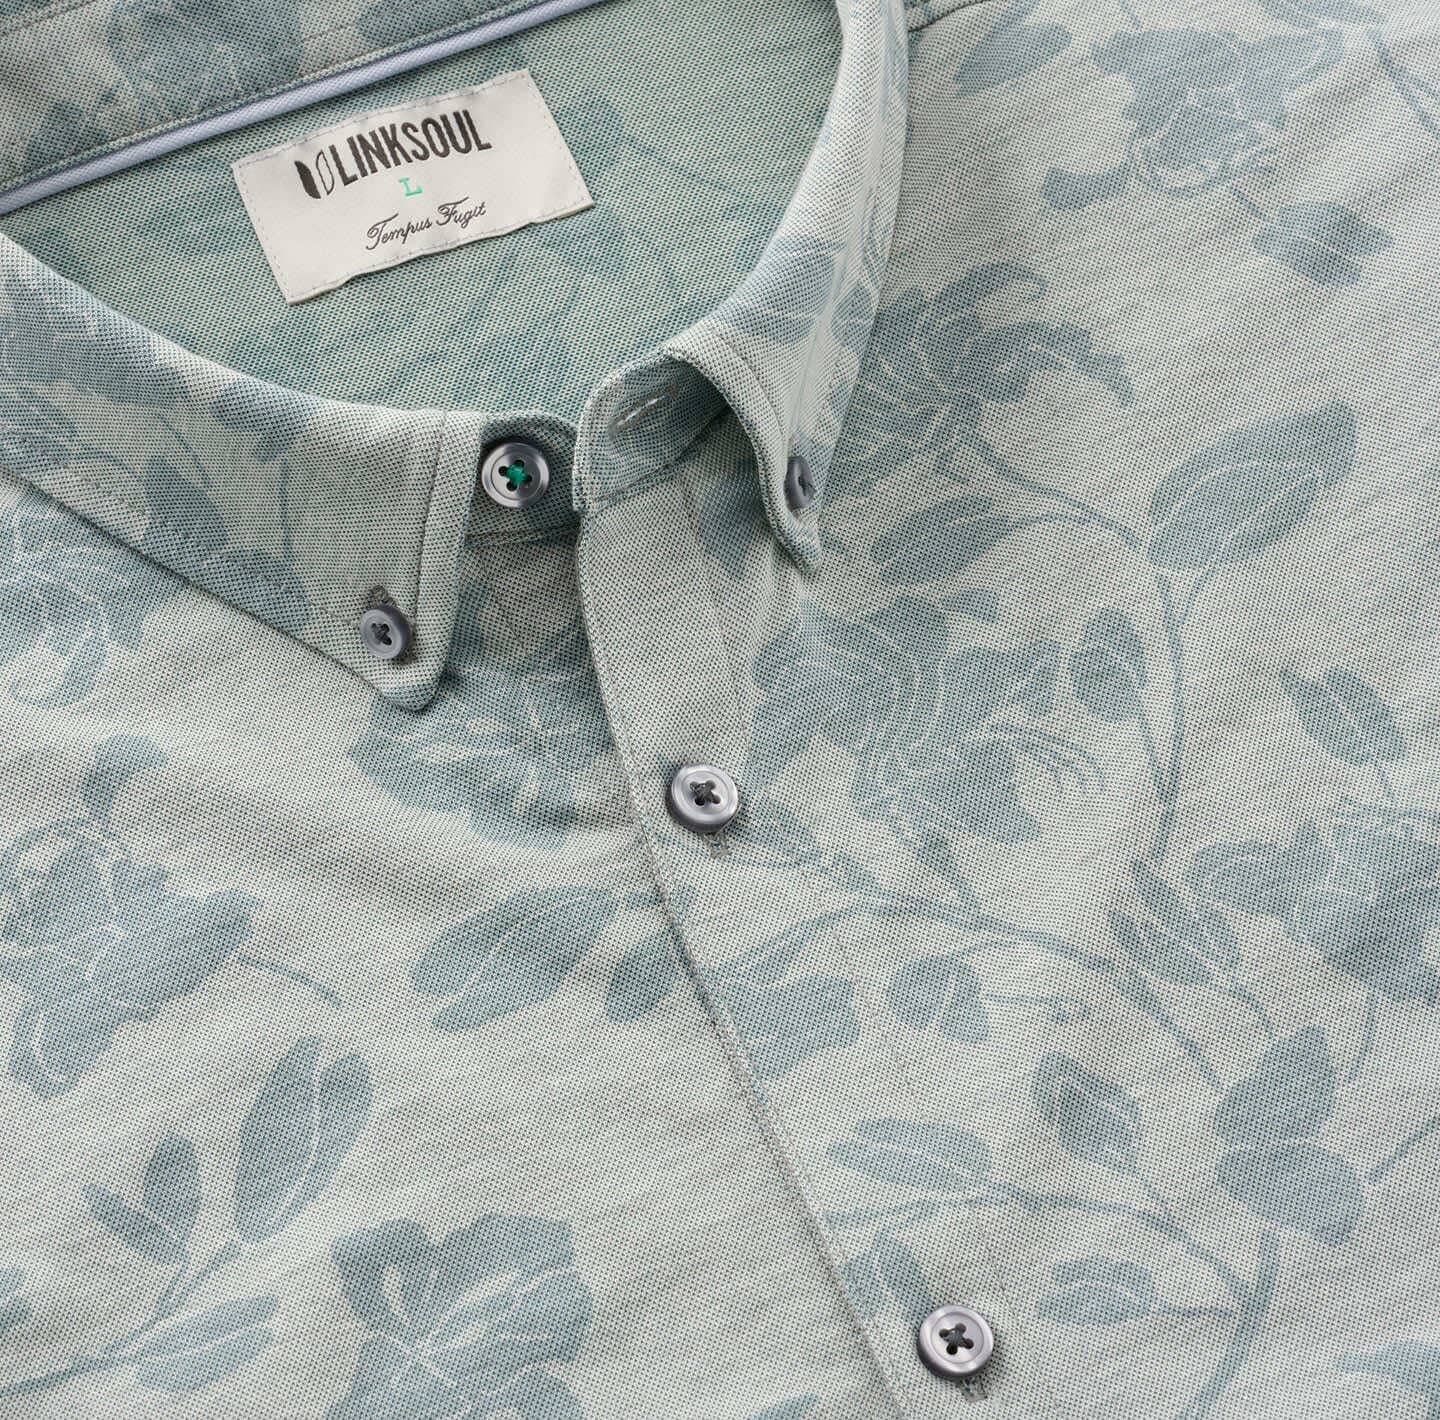 Printed Astoria Shirt - LINKSOUL